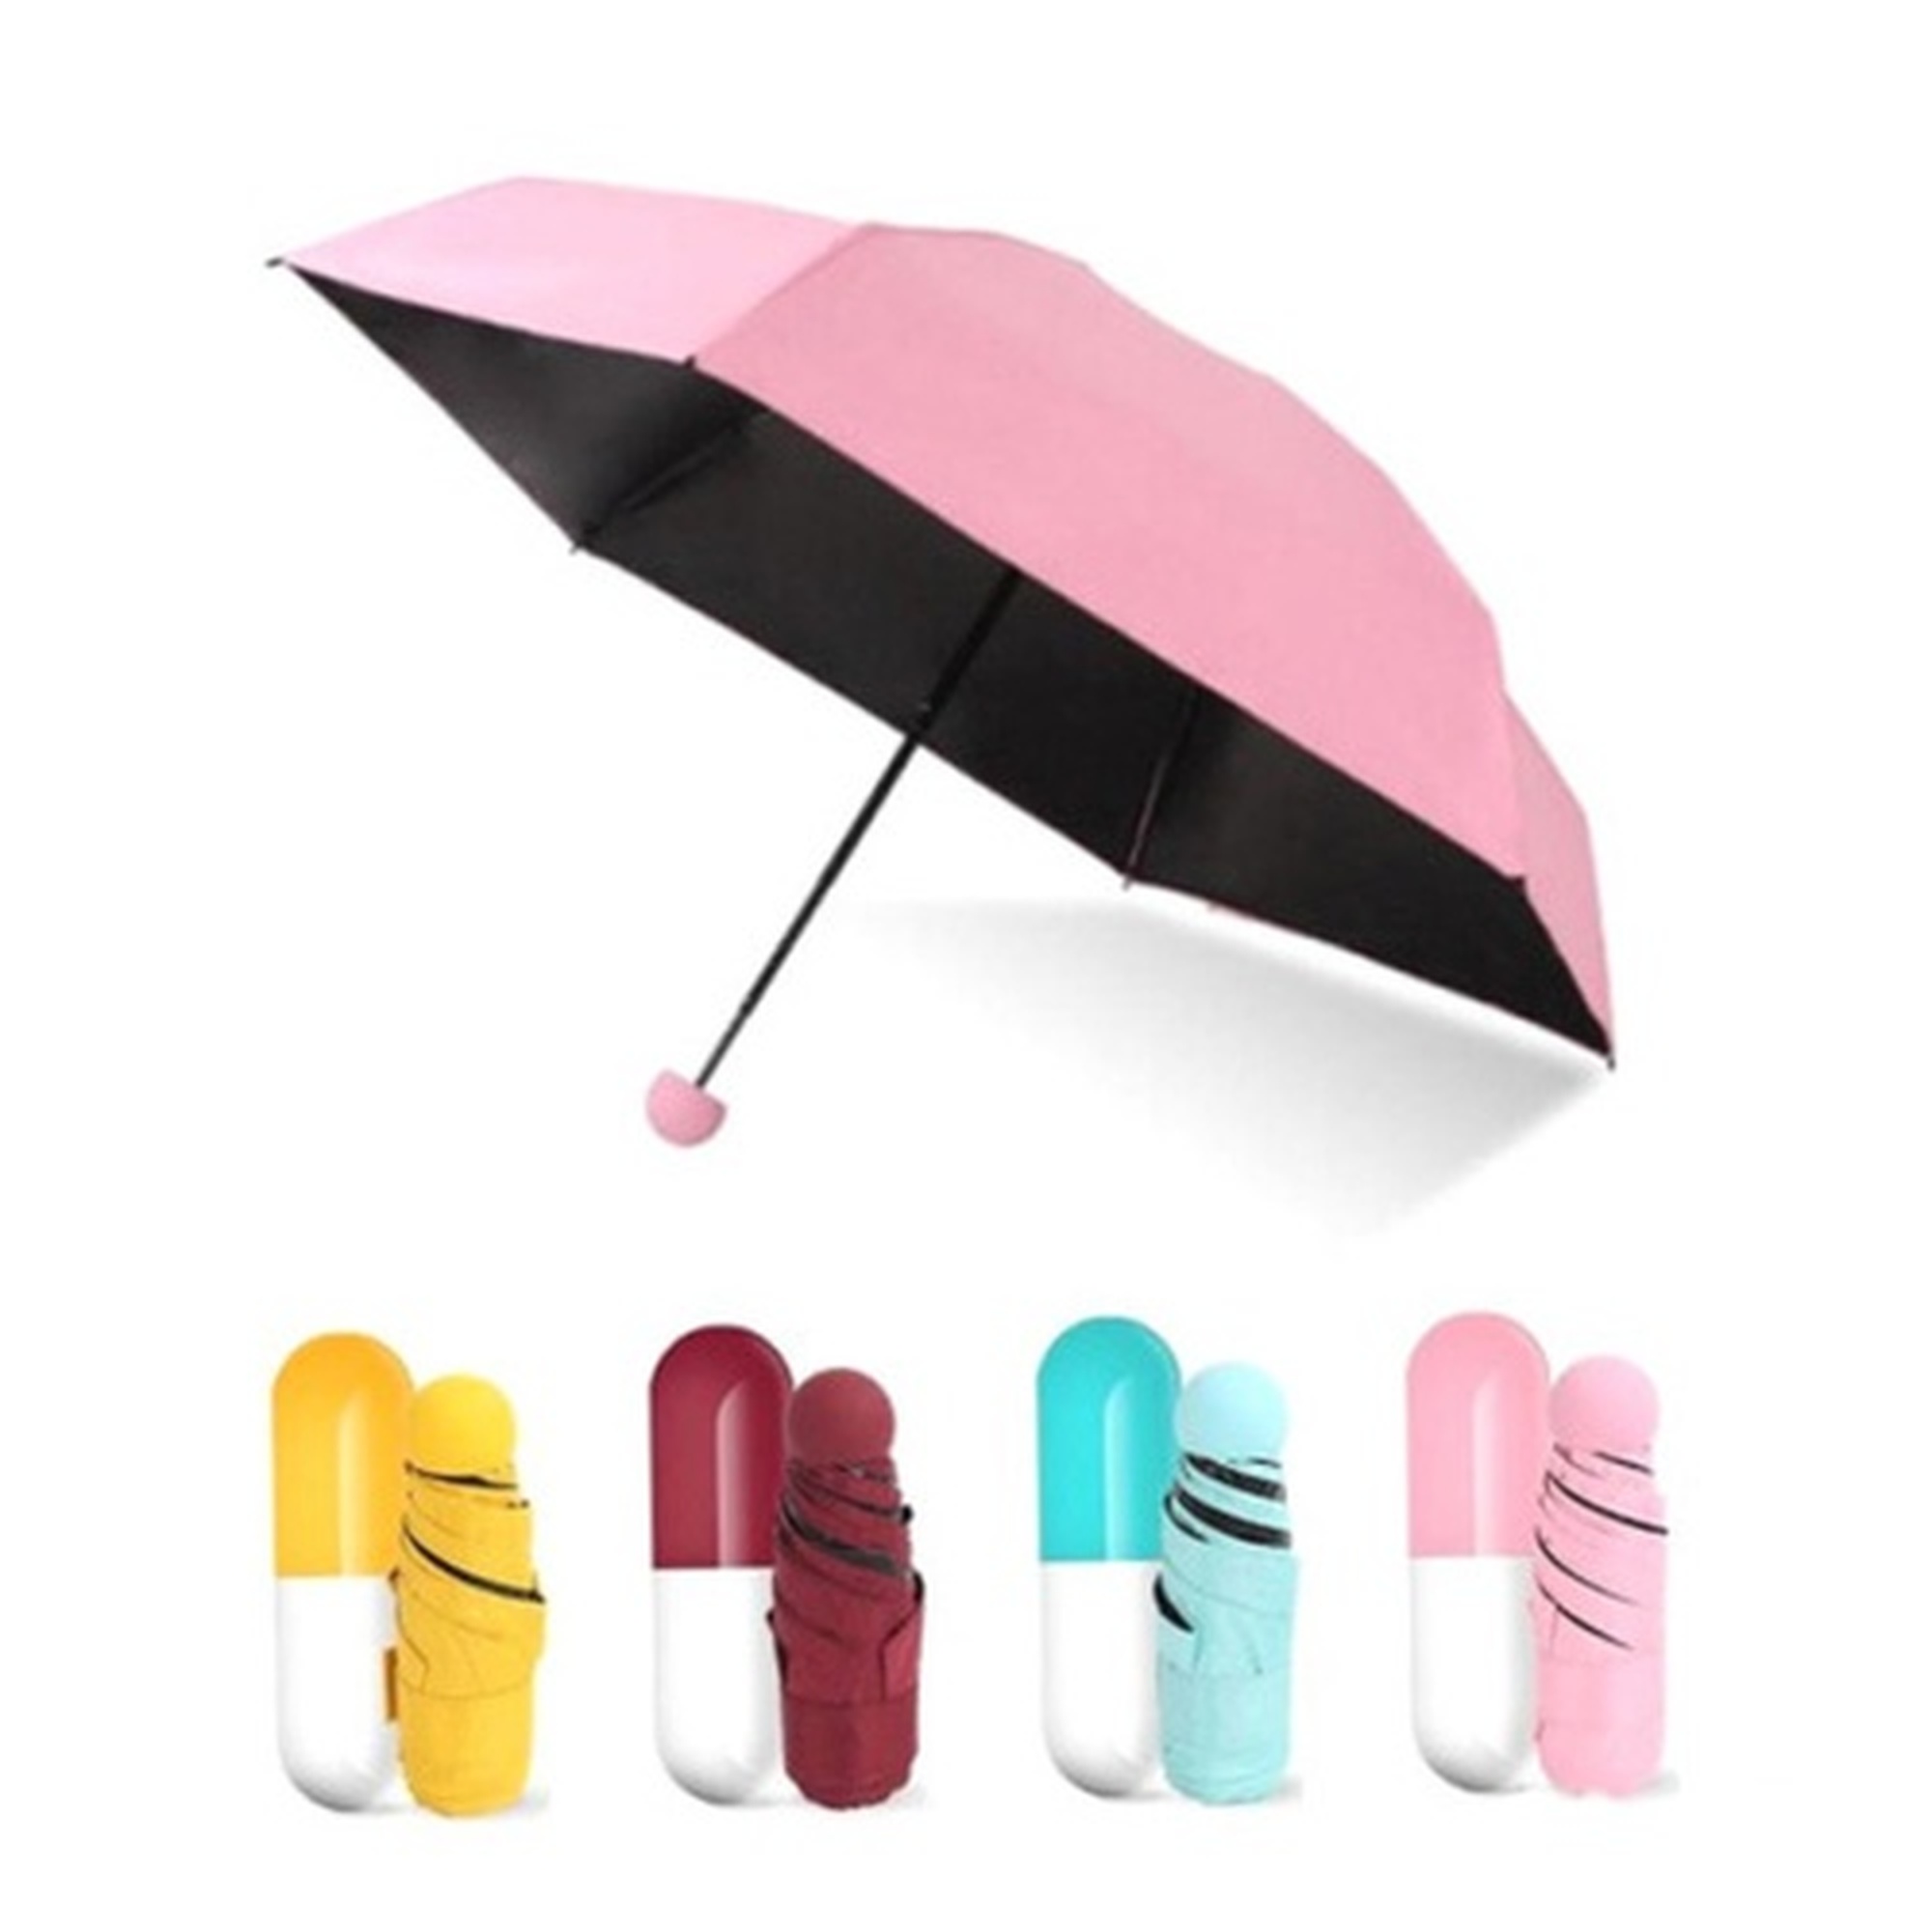 Мини зонтики. Зонт Mini Pocket Umbrella. RZ-564 зонт-капсула. Амбрелла капсулы. Карманный зонт в футляре капсула.